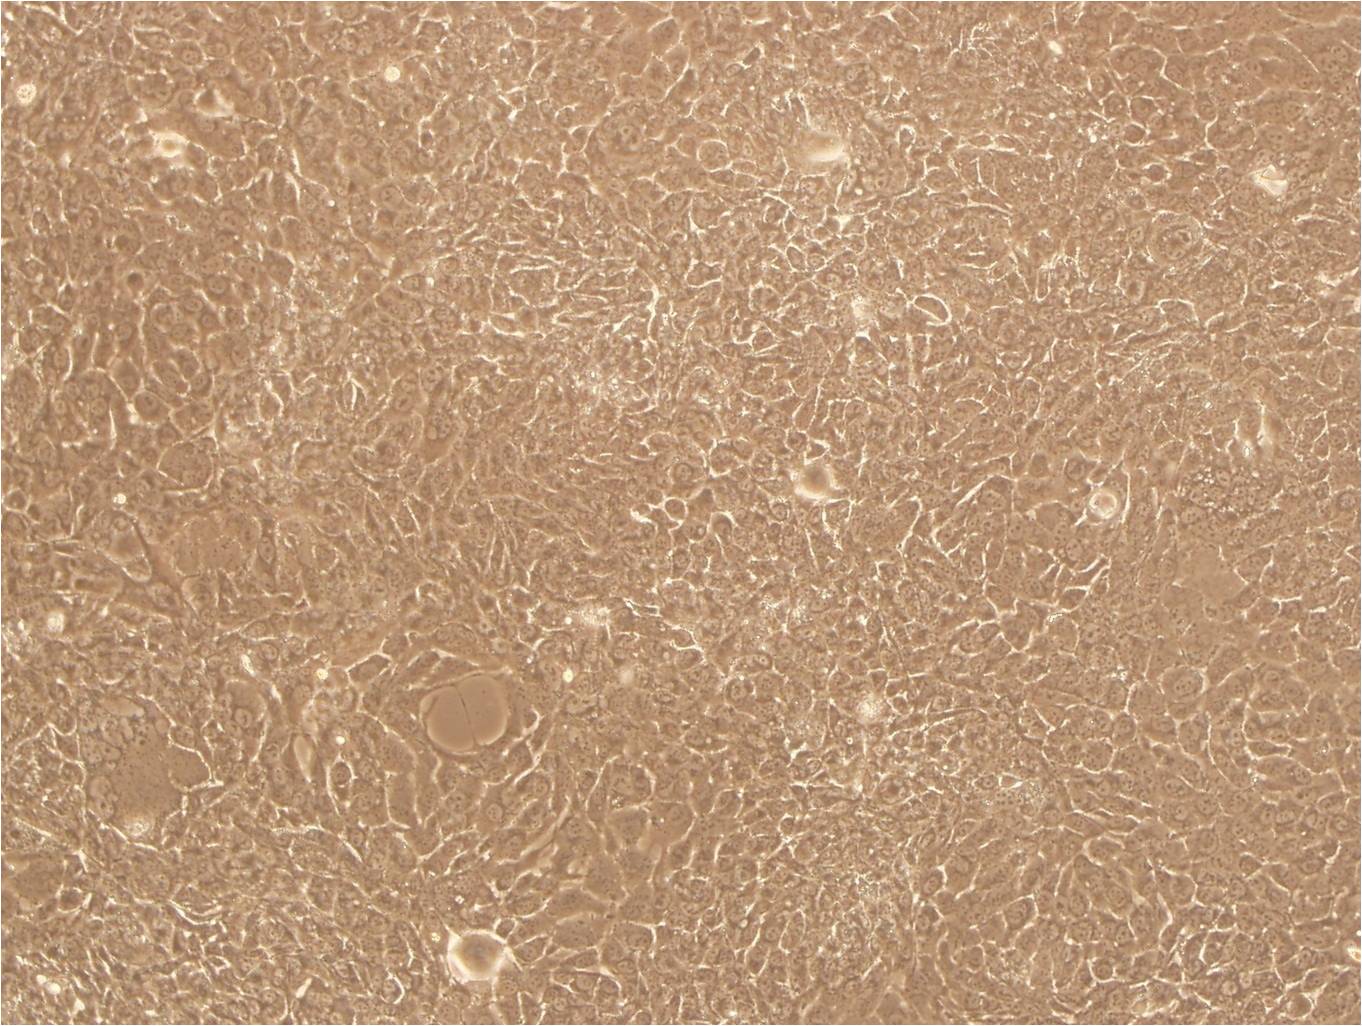 TFK-1 Cells(赠送Str鉴定报告)|人胆管癌细胞,TFK-1 Cells